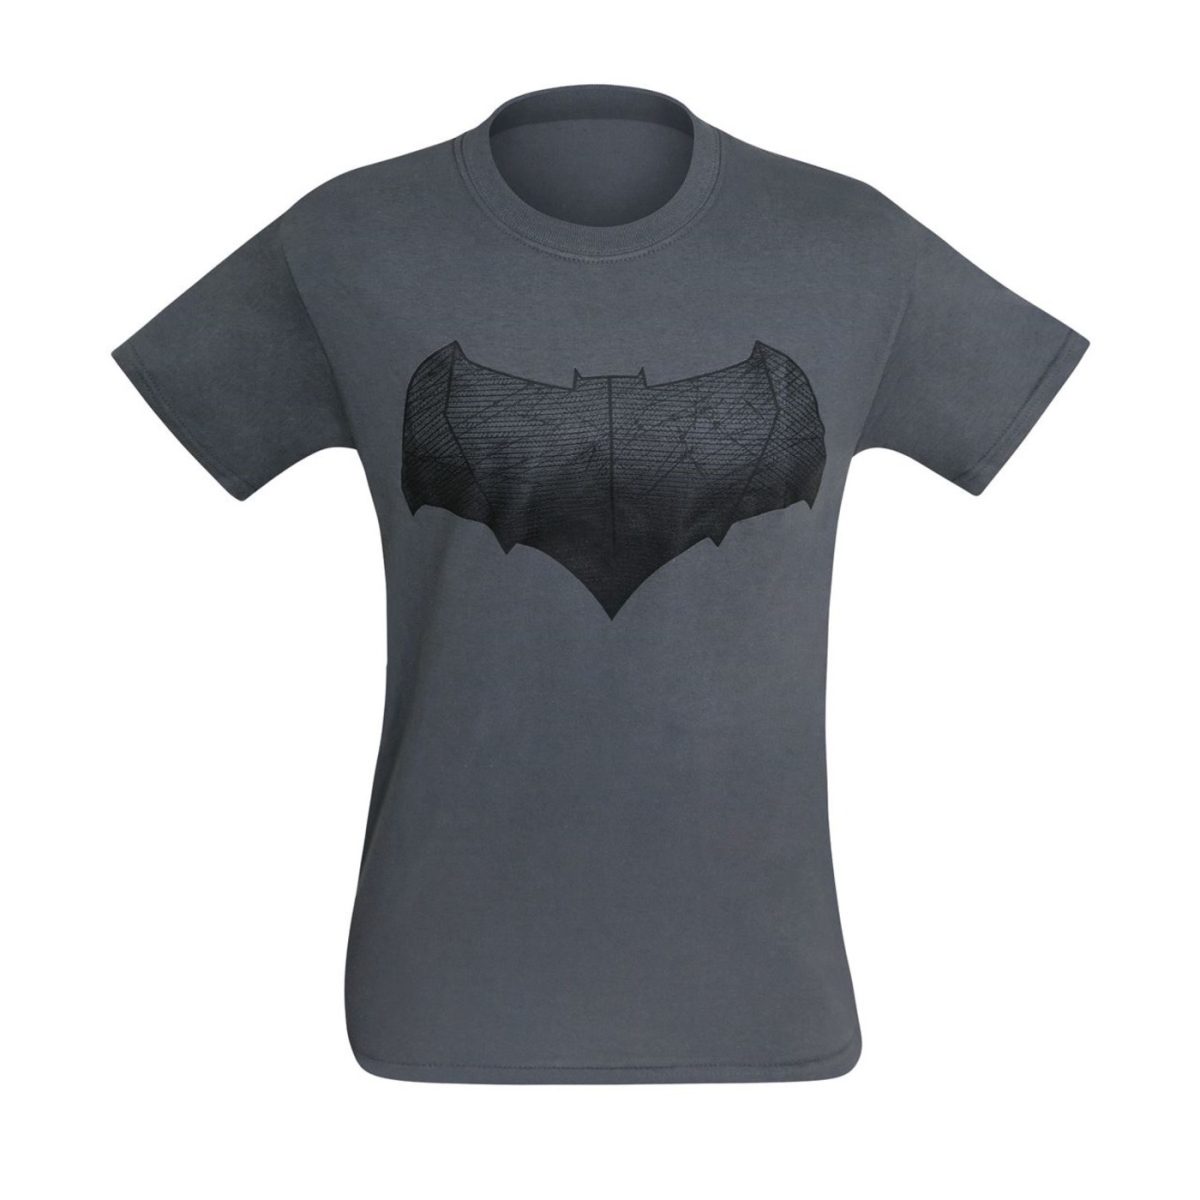 Must Have Tsbvsbatsyms Vs Superman Bat Symbol Mens T Shirt Small From Batman Fandom Shop - superman torso roblox